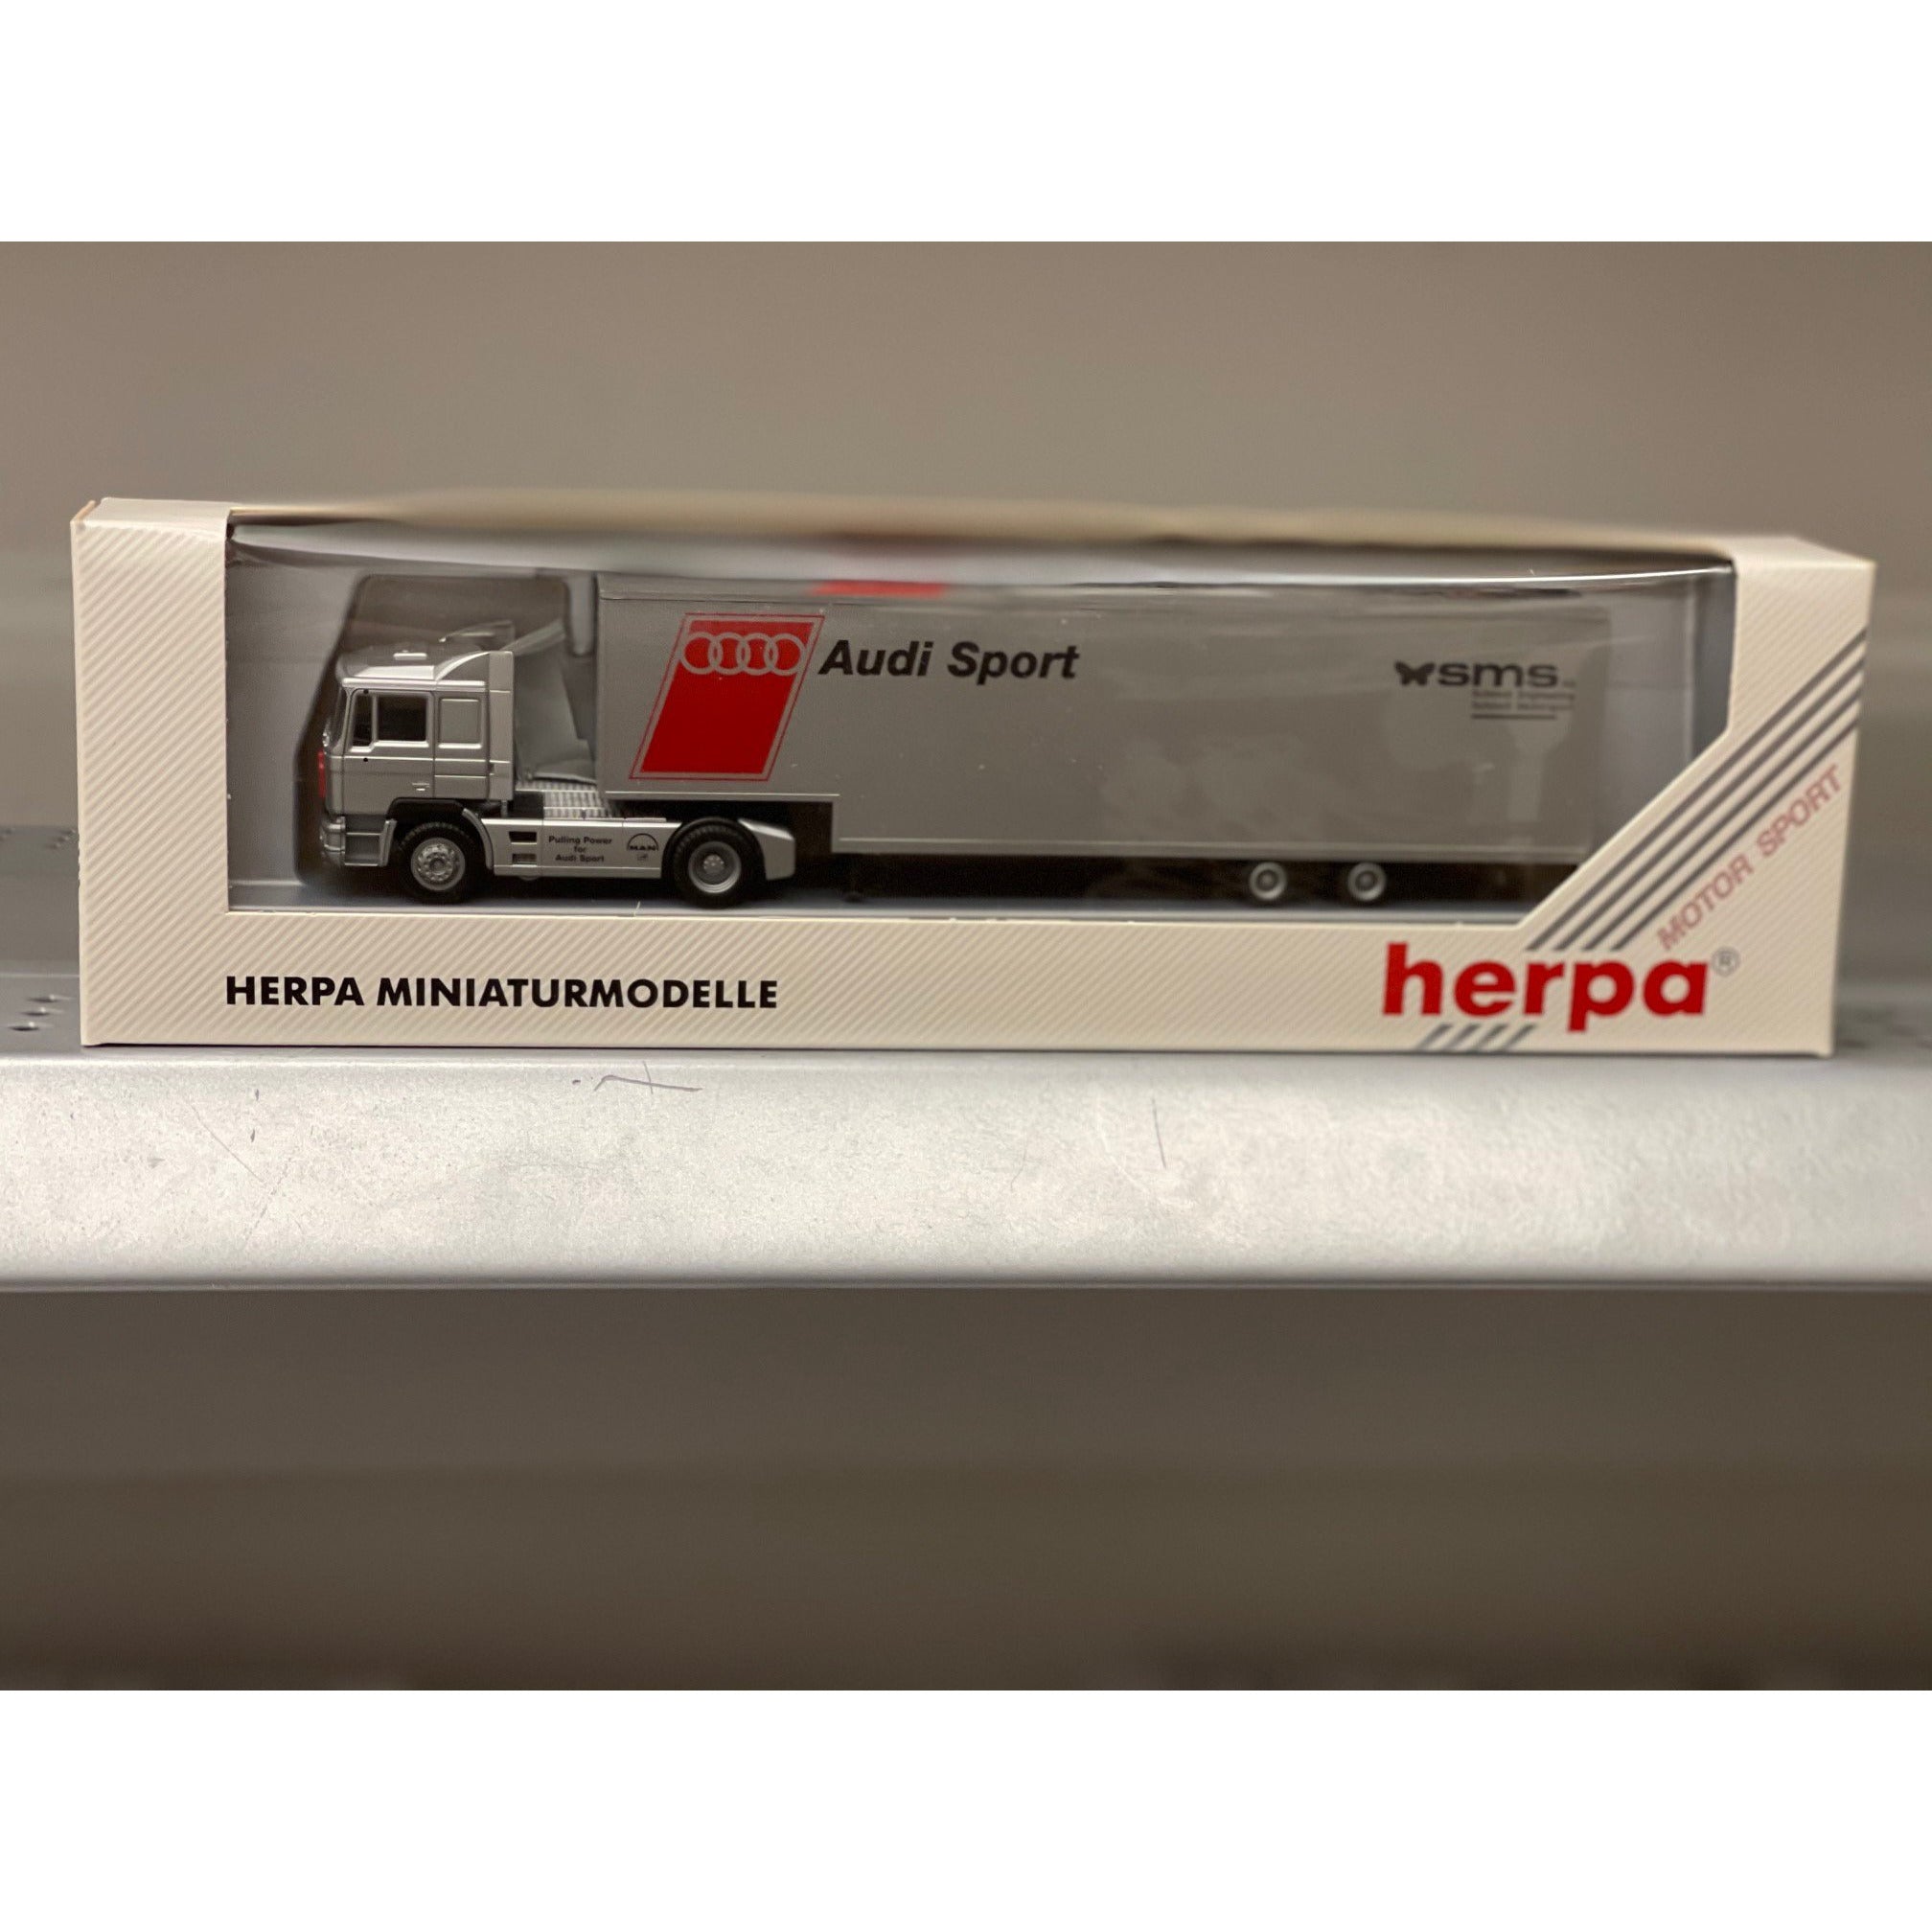 Herpa Wagener Miniature Automobile 1:87 (HO) #035651 Audi Sport